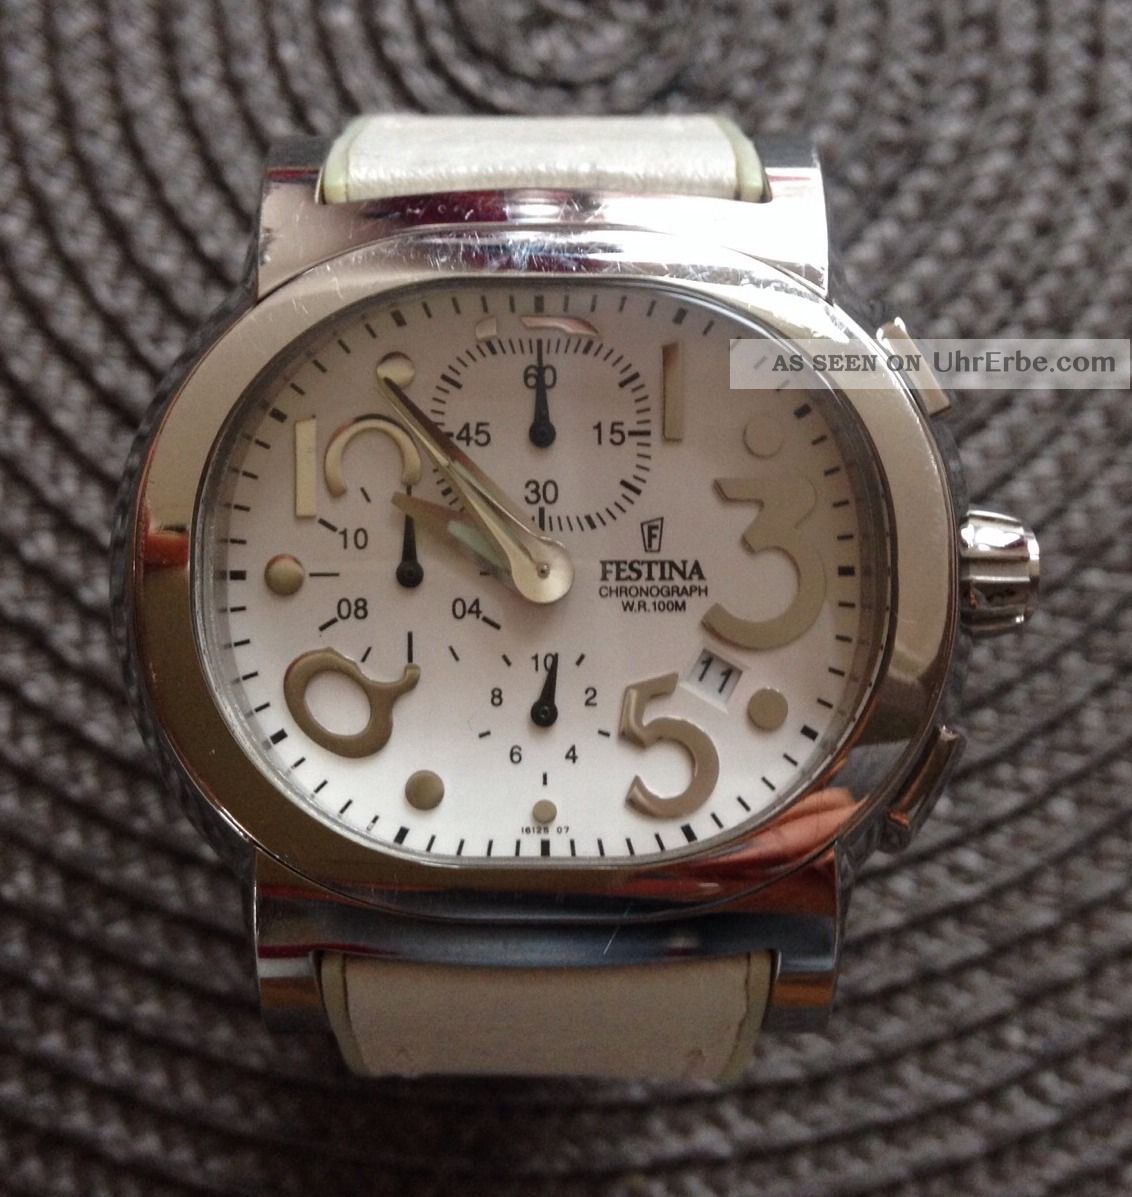 Festina Damenuhr Uhr Weiss Silber Sportlich Edel Chronograph Armbanduhren Bild